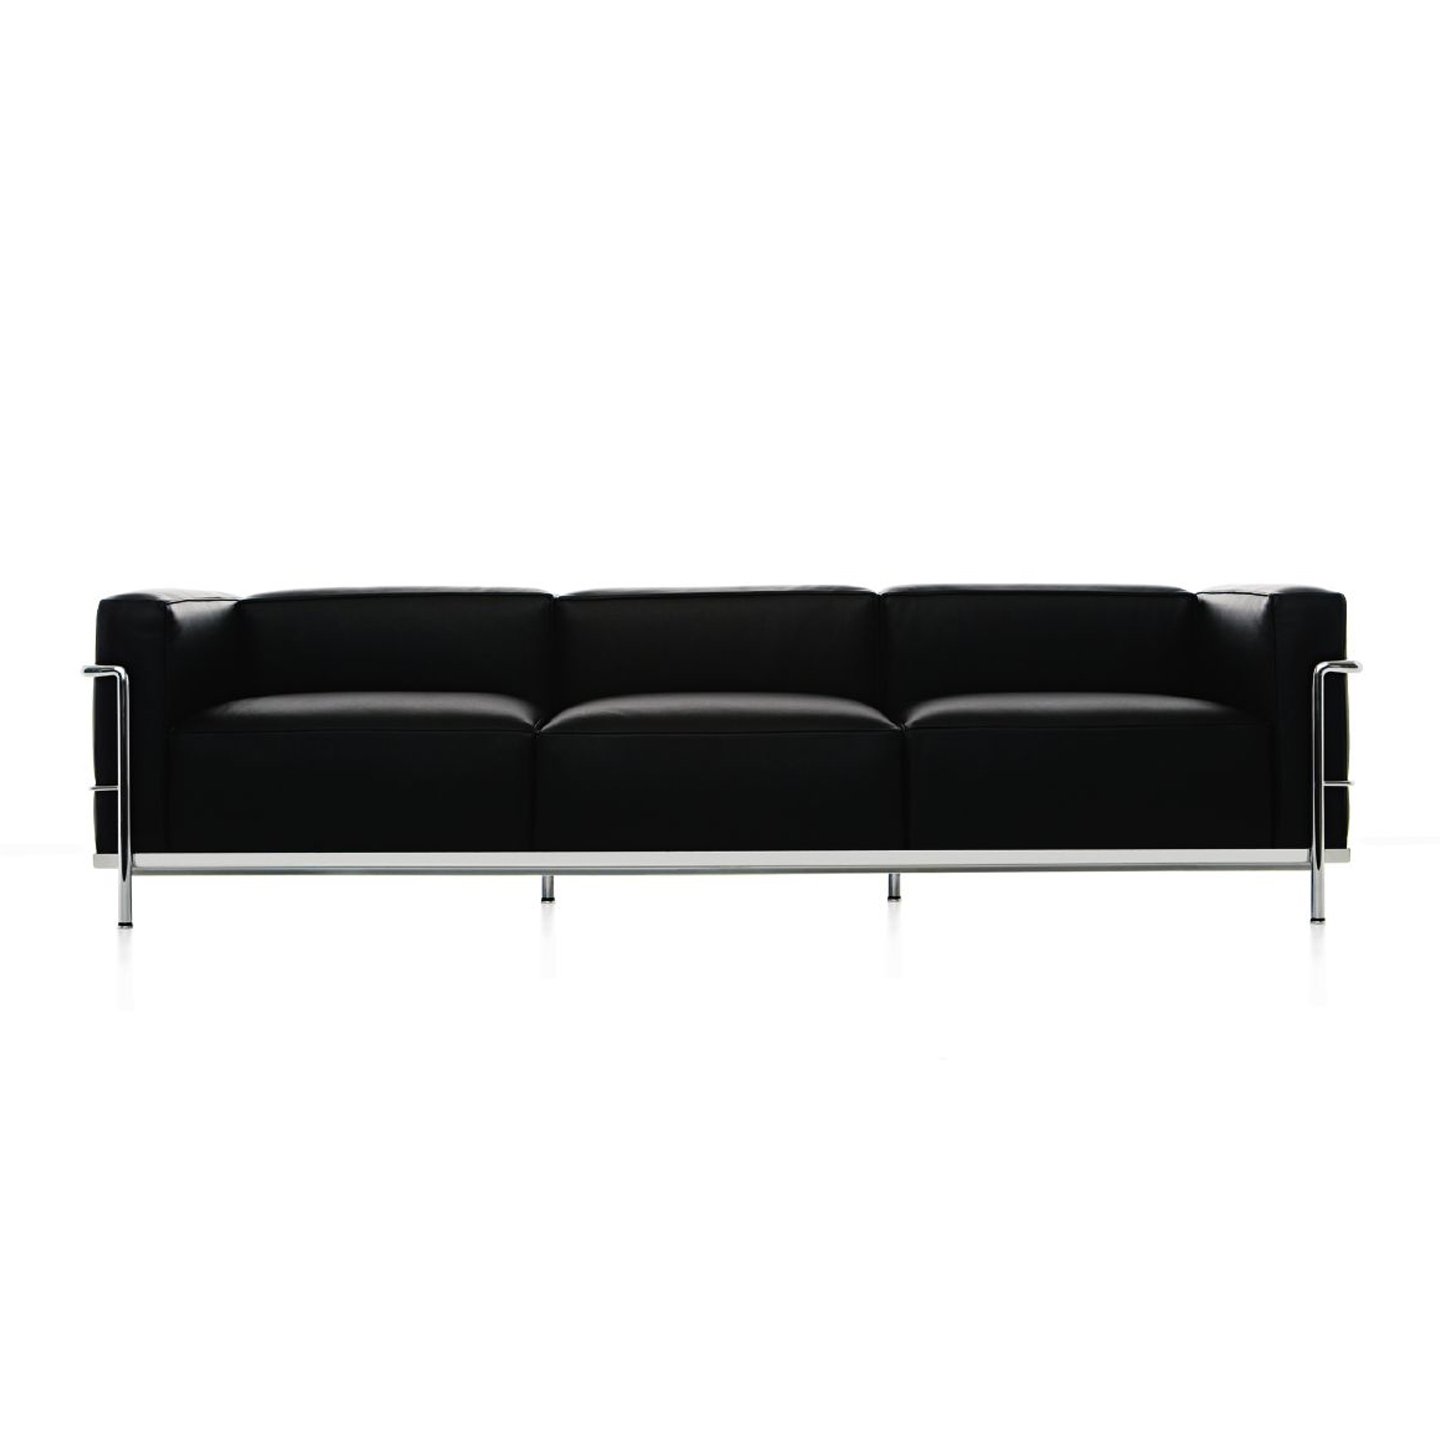 Haworth LC3 three seater sofa in black upholstery